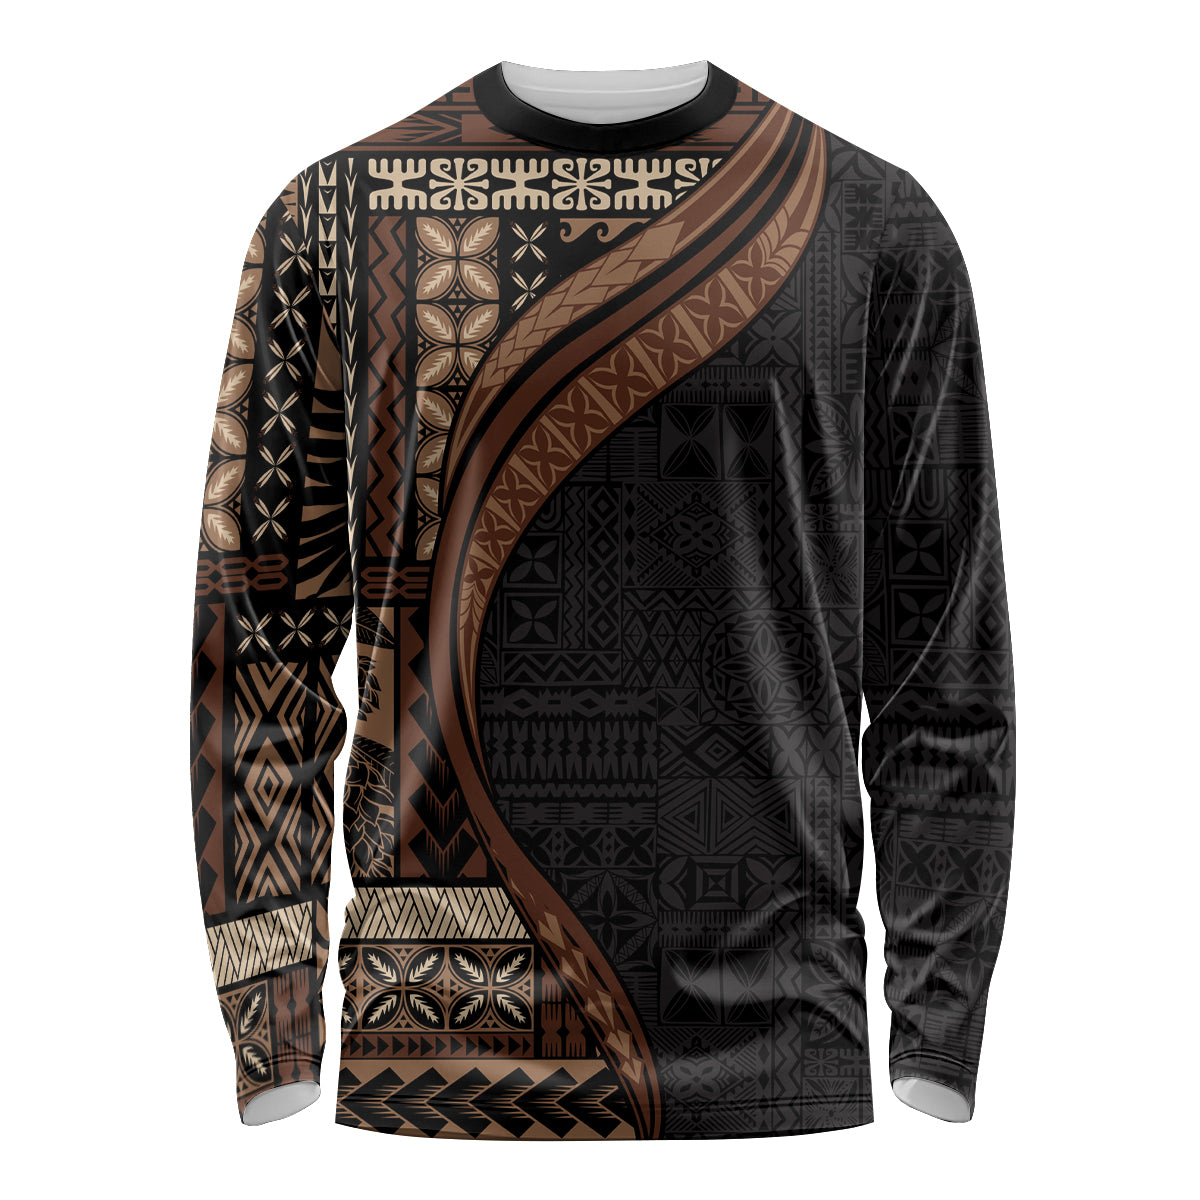 Samoa Siapo Motif and Tapa Pattern Half Style Long Sleeve Shirt Black Color